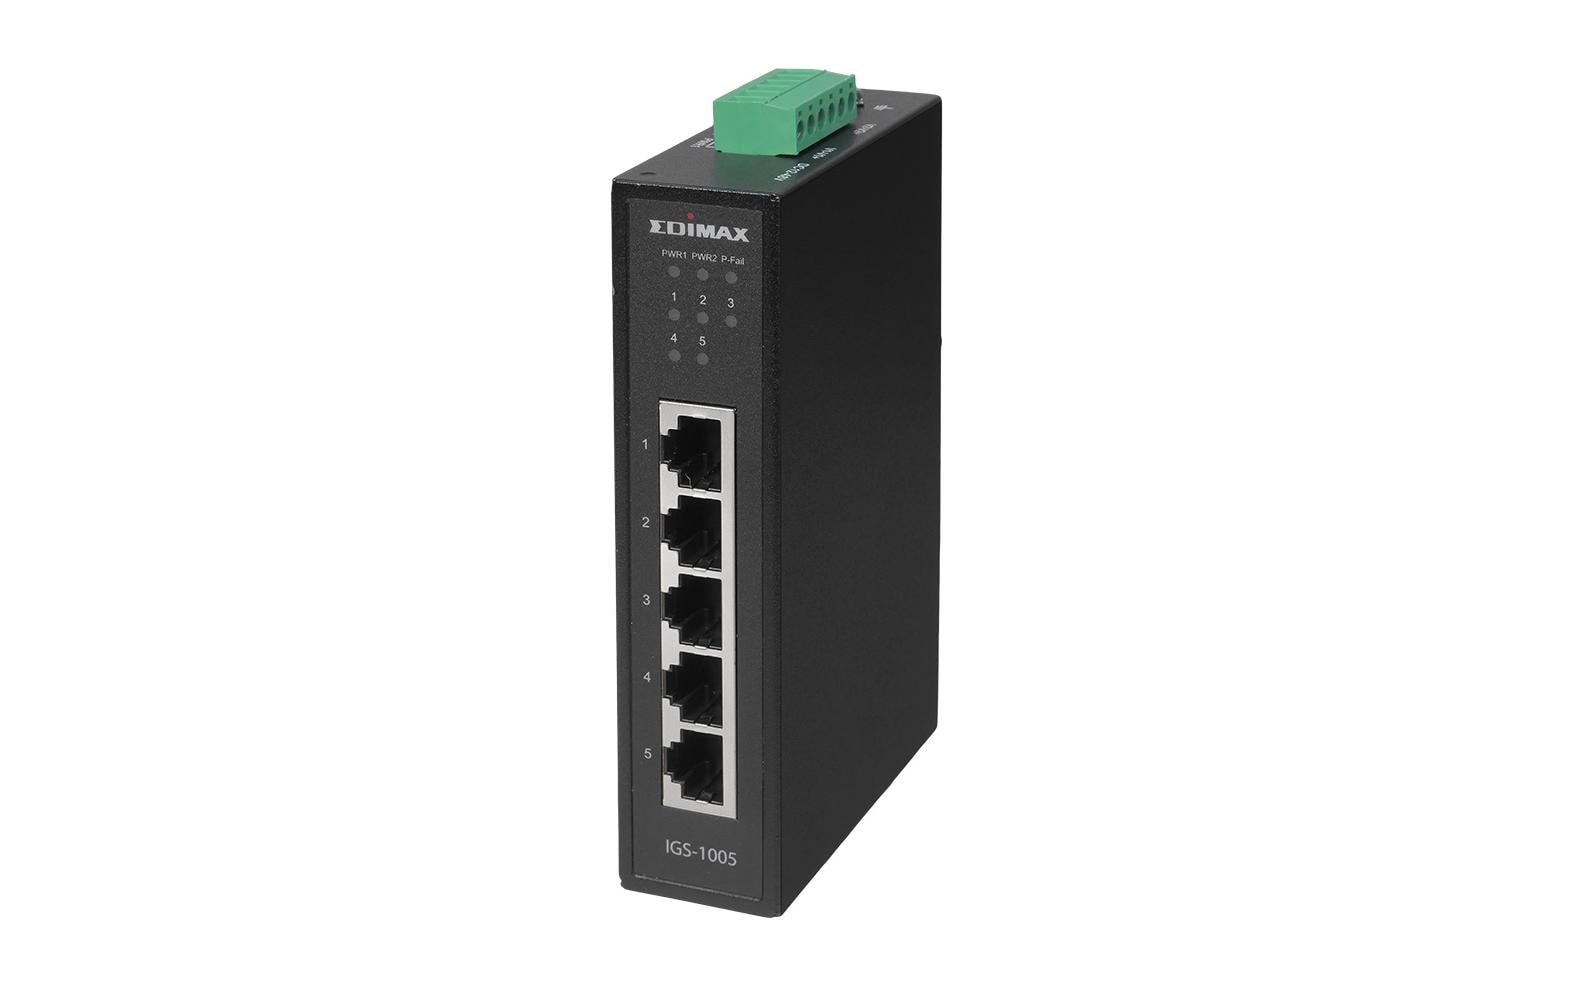 Edimax Pro Rail Switch IGS-1005 5 Port